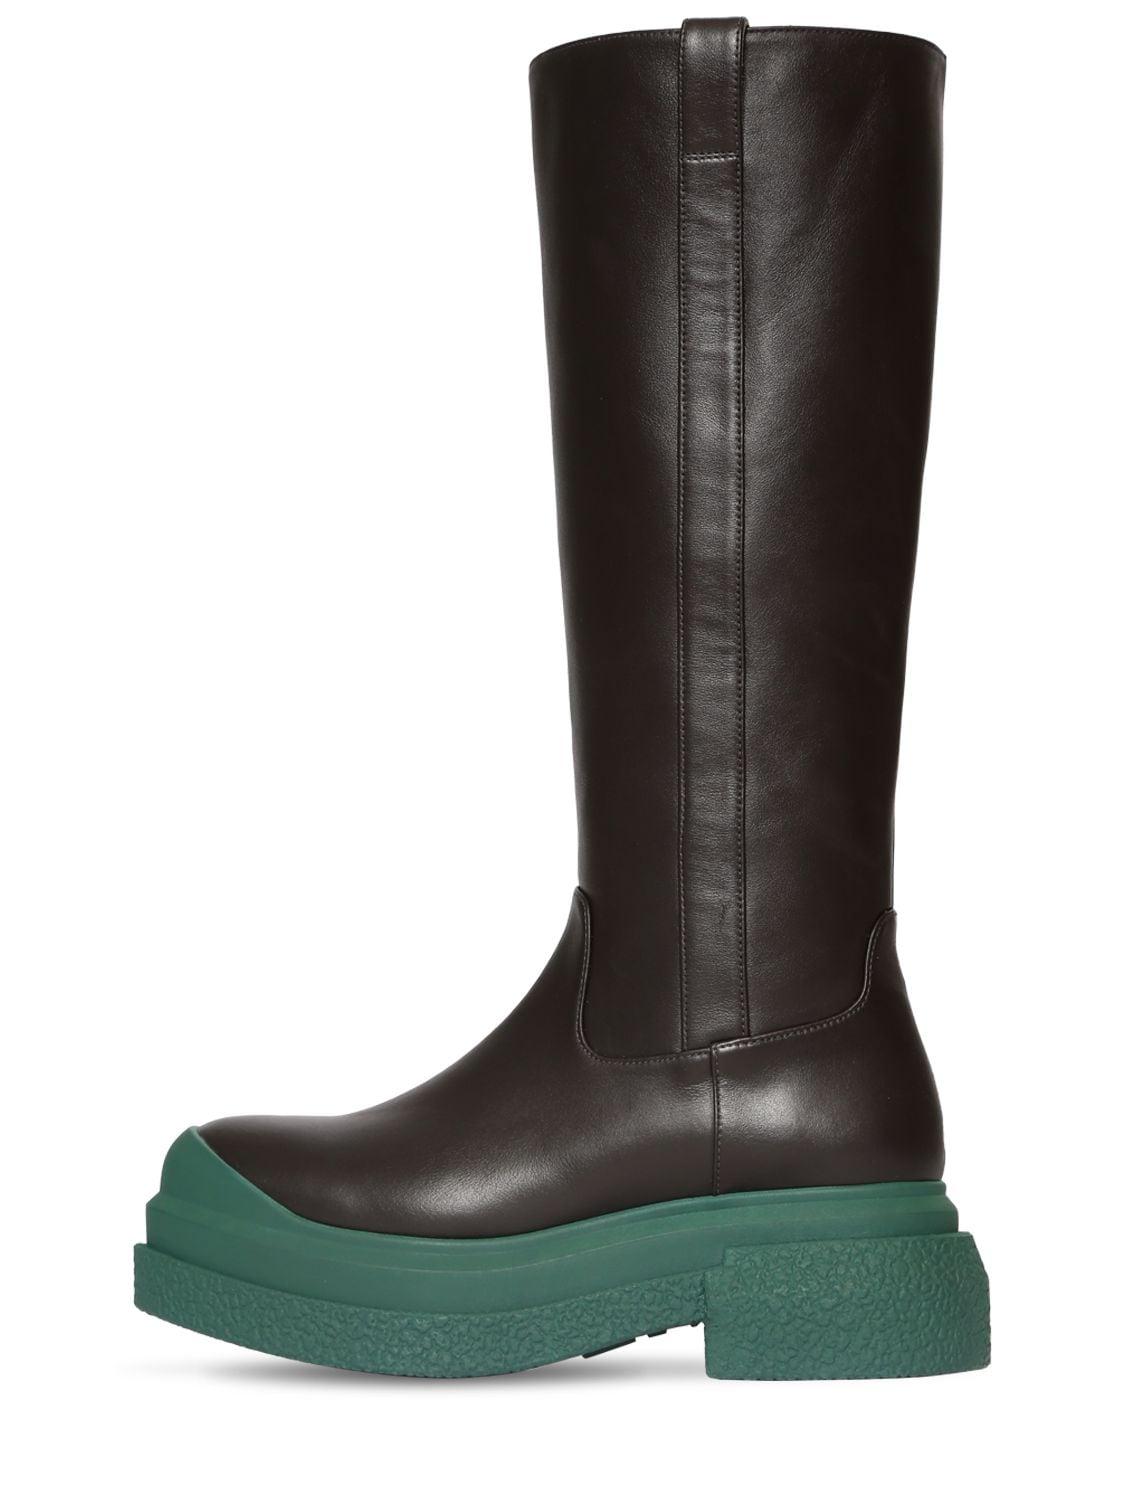 Stuart Weitzman 60mm Charli Sportlift Leather Boots in Black/Green 